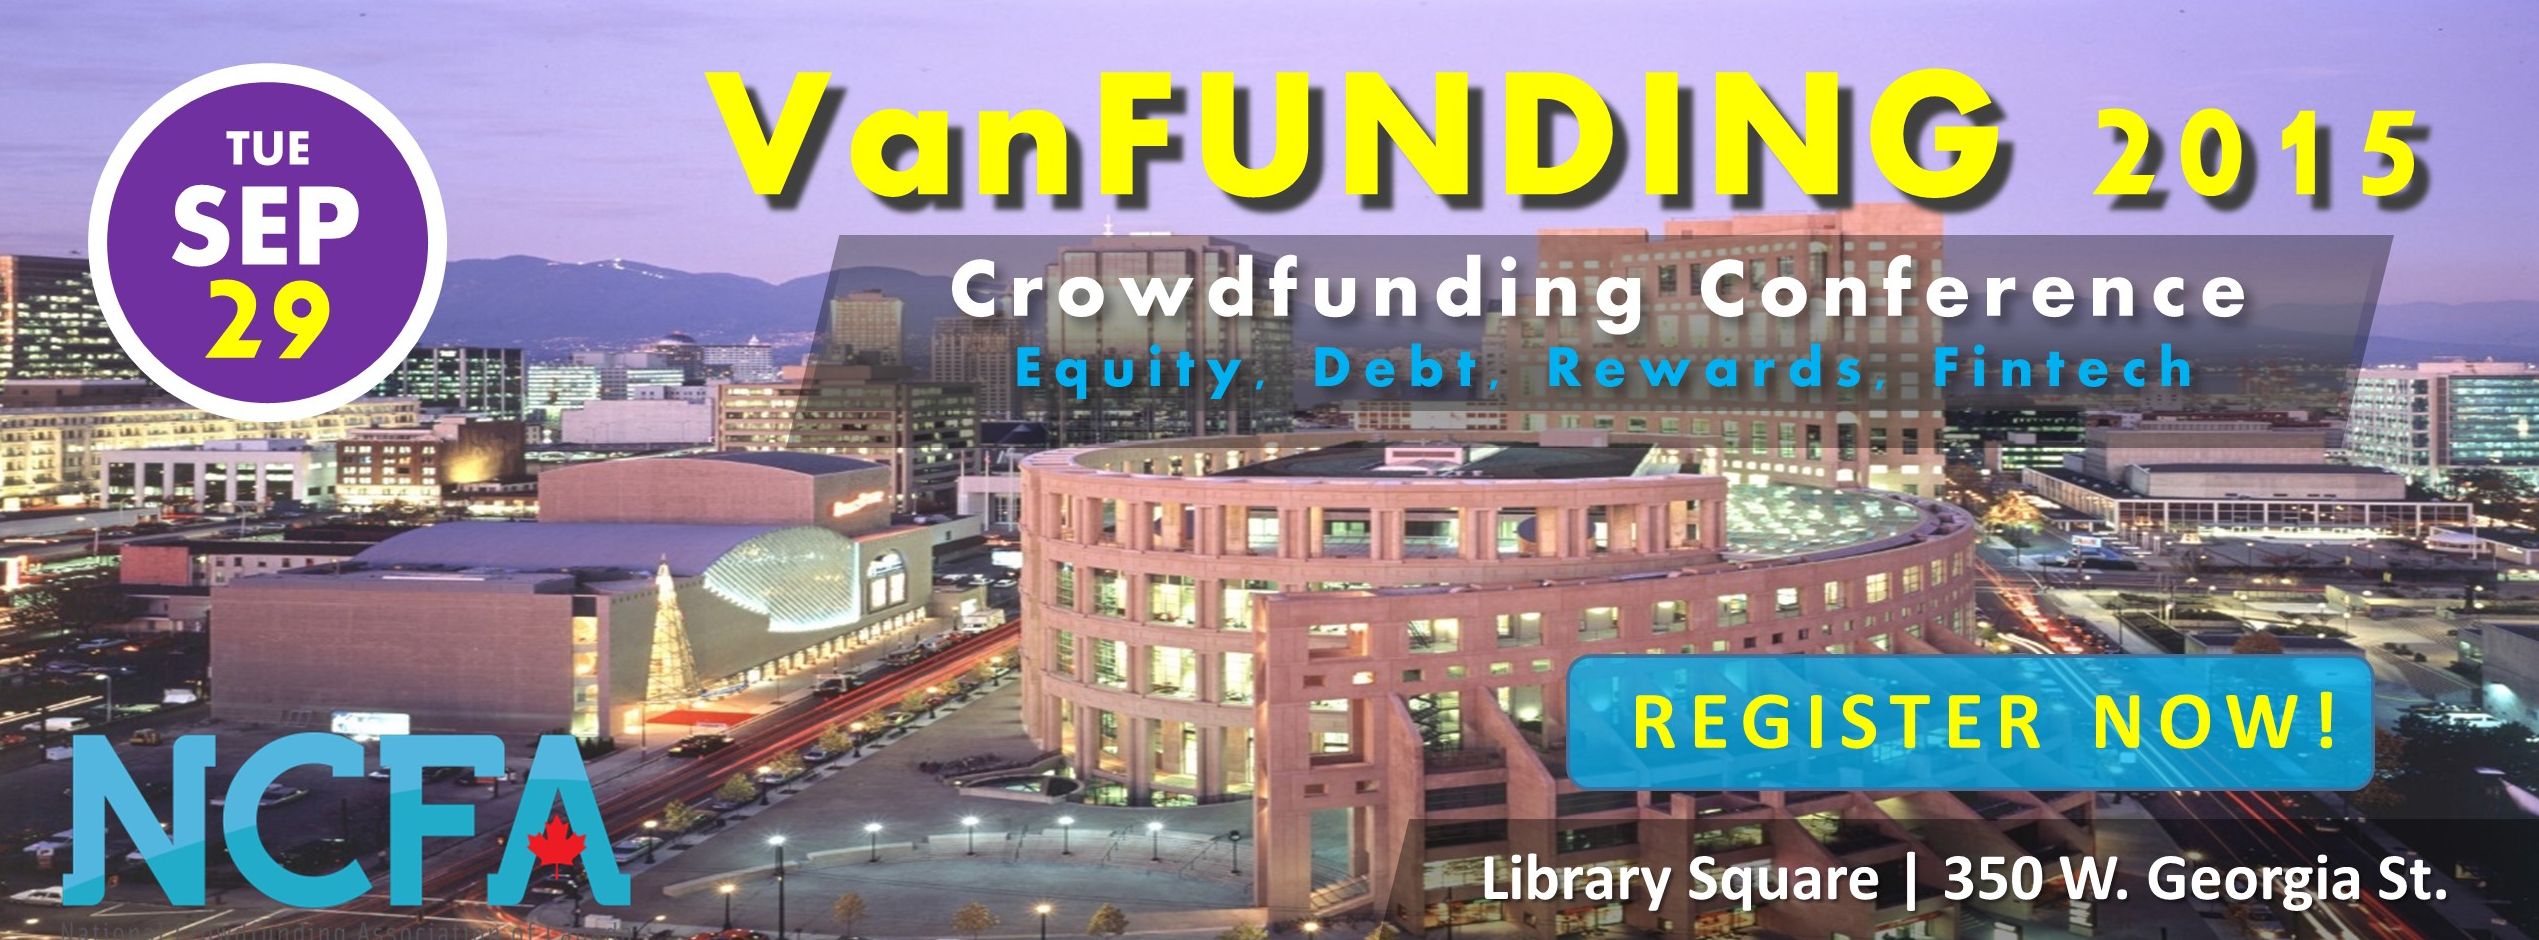 VanFUNDING2015 Crowdfunding Conference